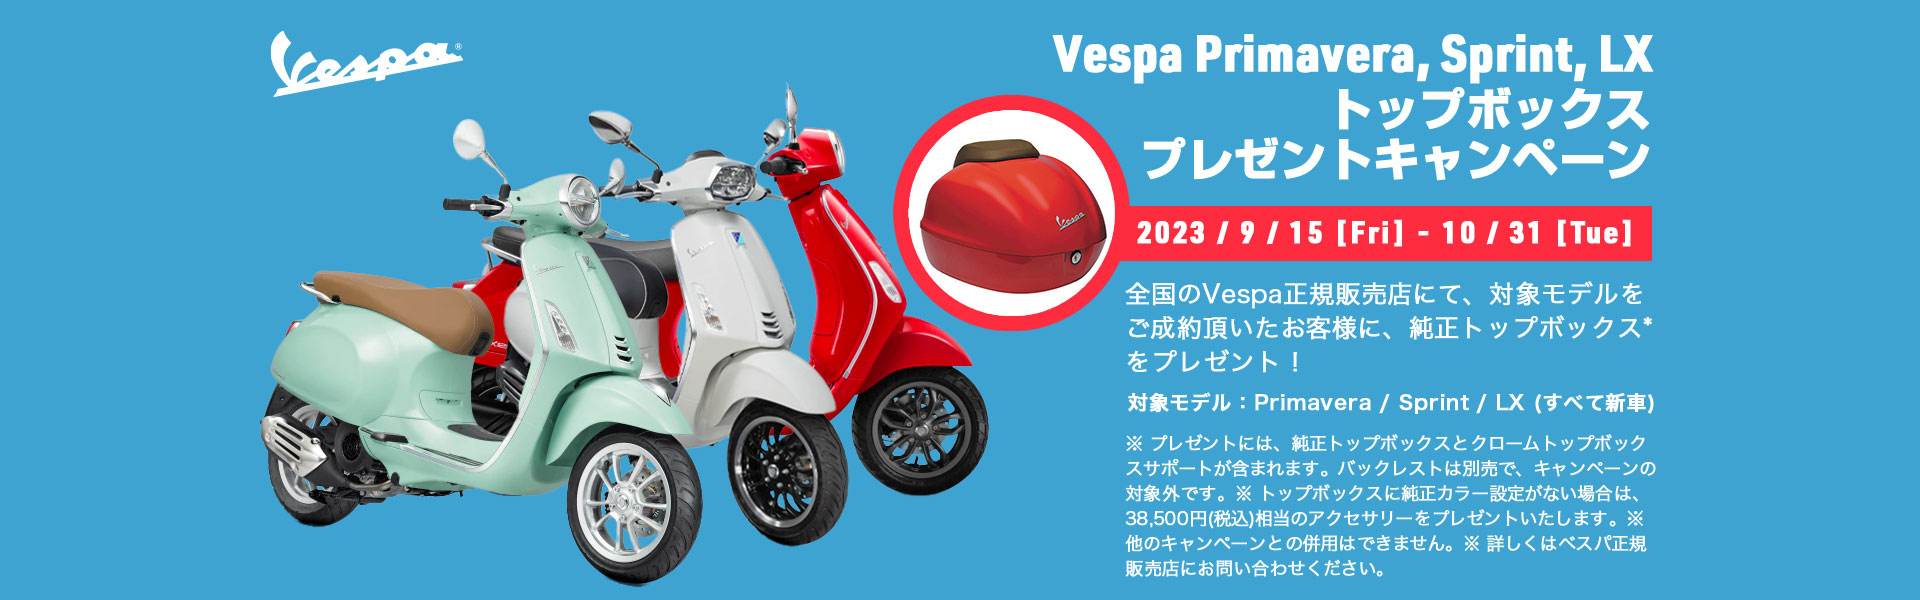 Vespa Primavera、Sprint、LX  トップボックス<br>プレゼントキャンペーン実施のご案内 